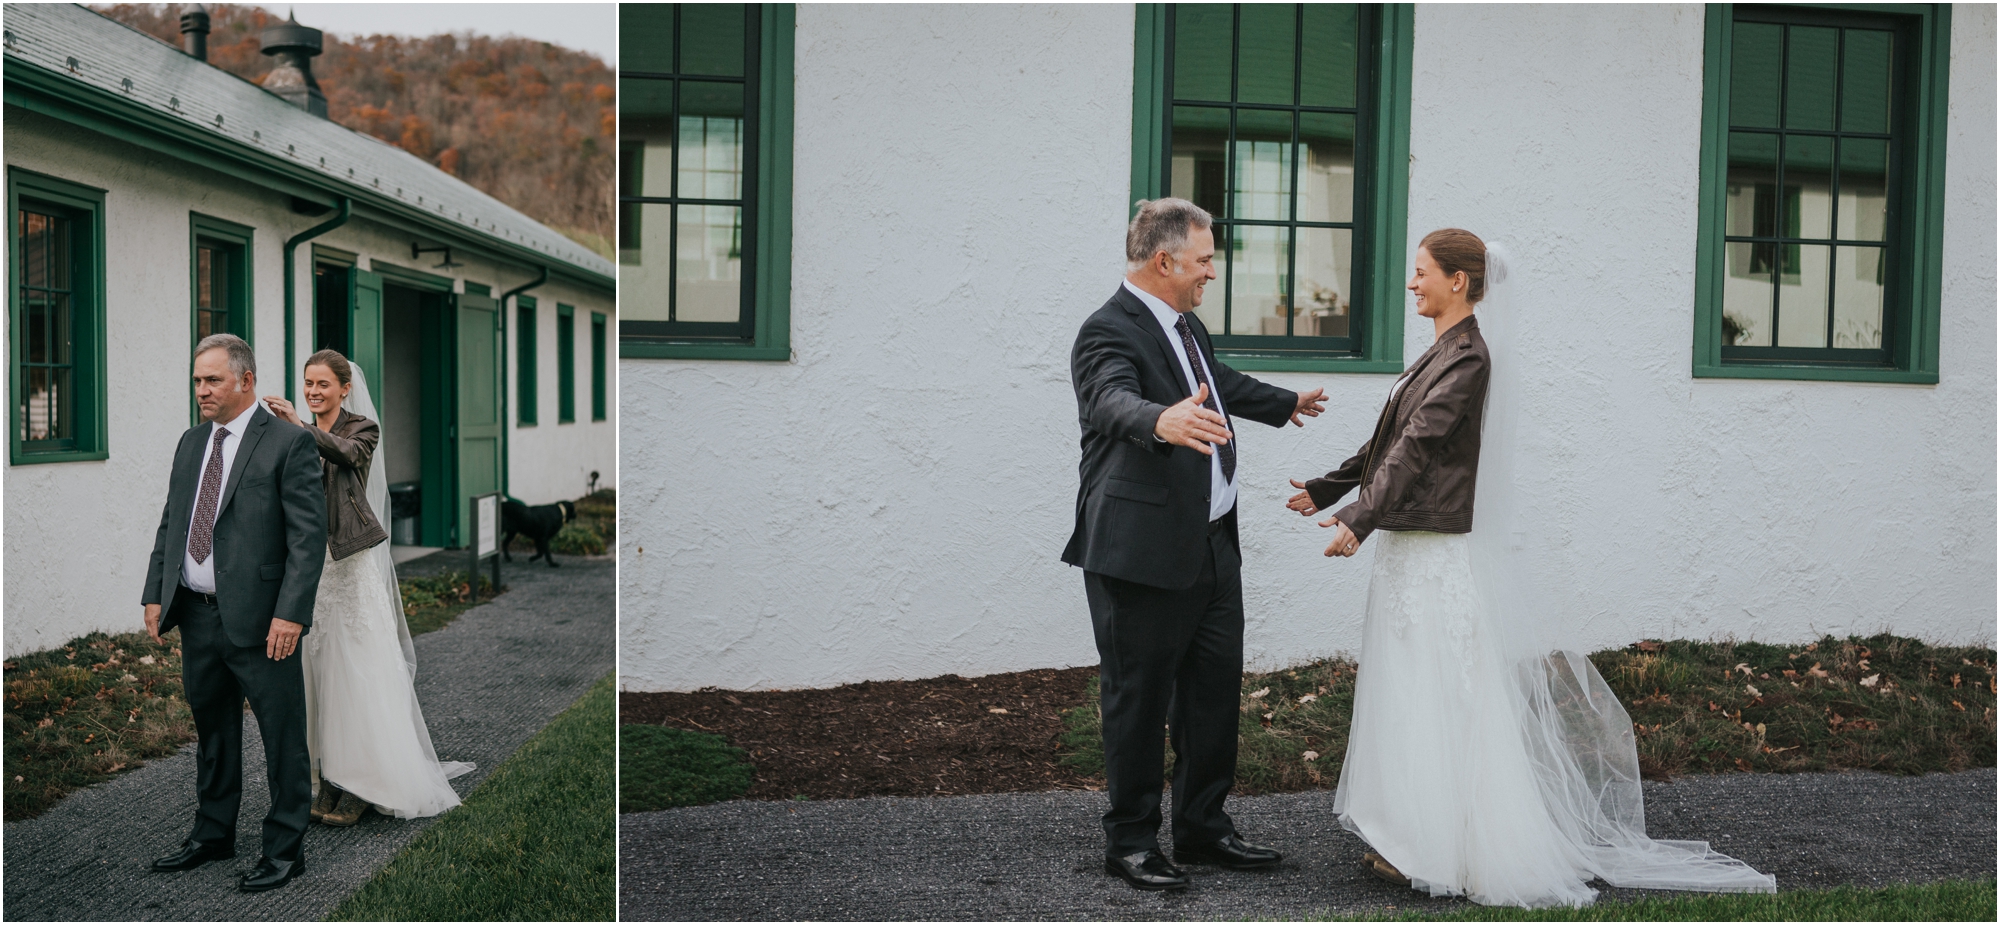 warm-springs-old-dairy-virginia-rustic-wedding-northeast-tennessee-elopement-adventuruous-photographer-katy-sergent_0022.jpg